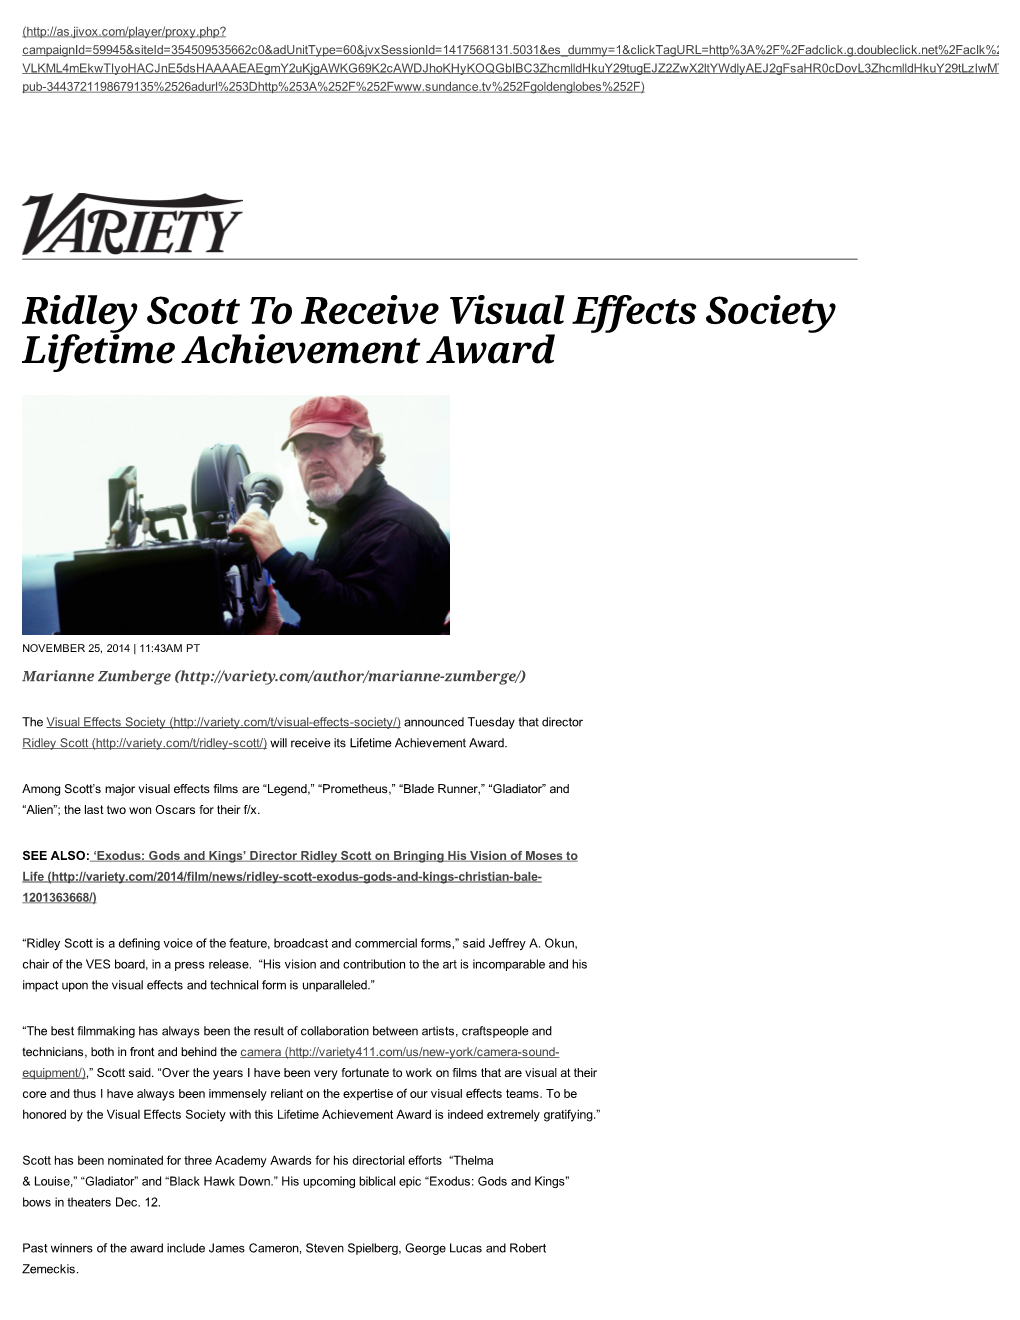 Ridley Scott to Receive Visual Effects Society Lifetime Achievement Award